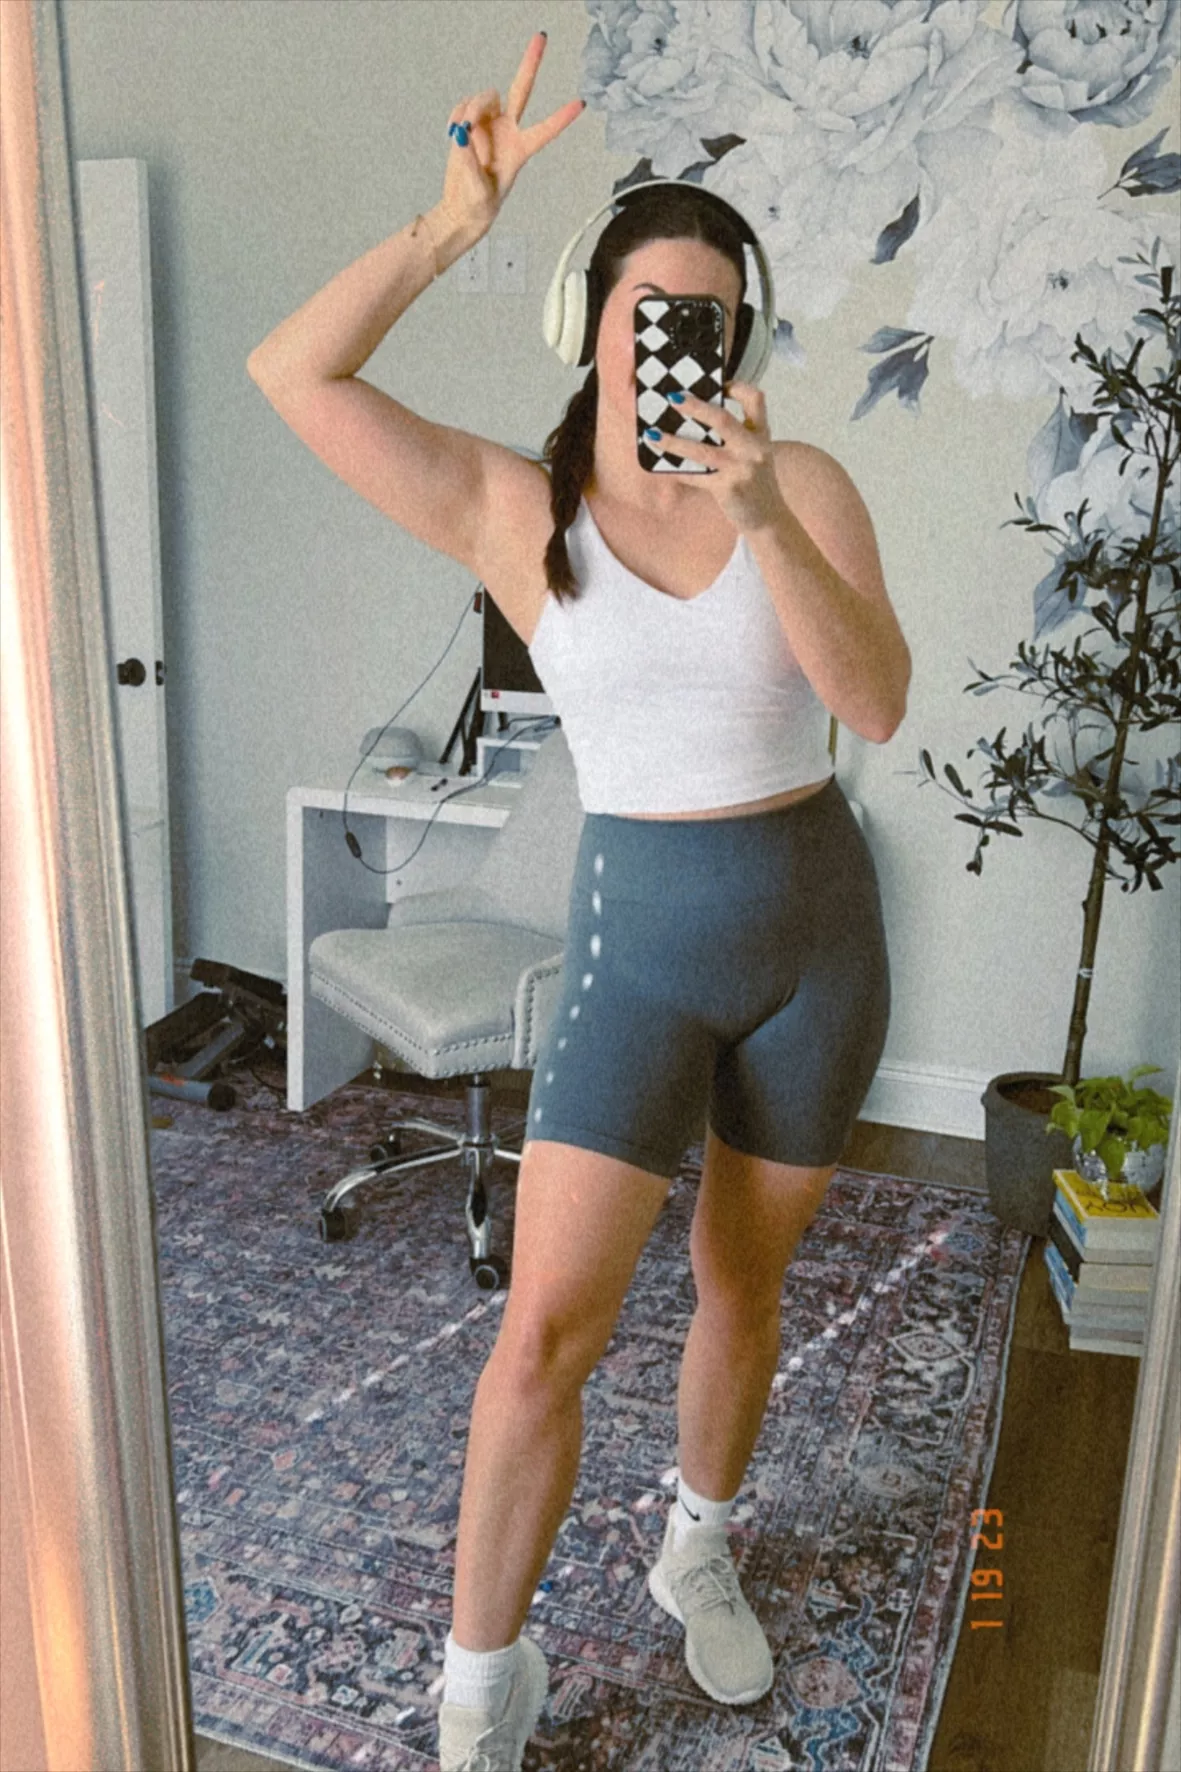 Aurola Shorts & Biker shorts (S)